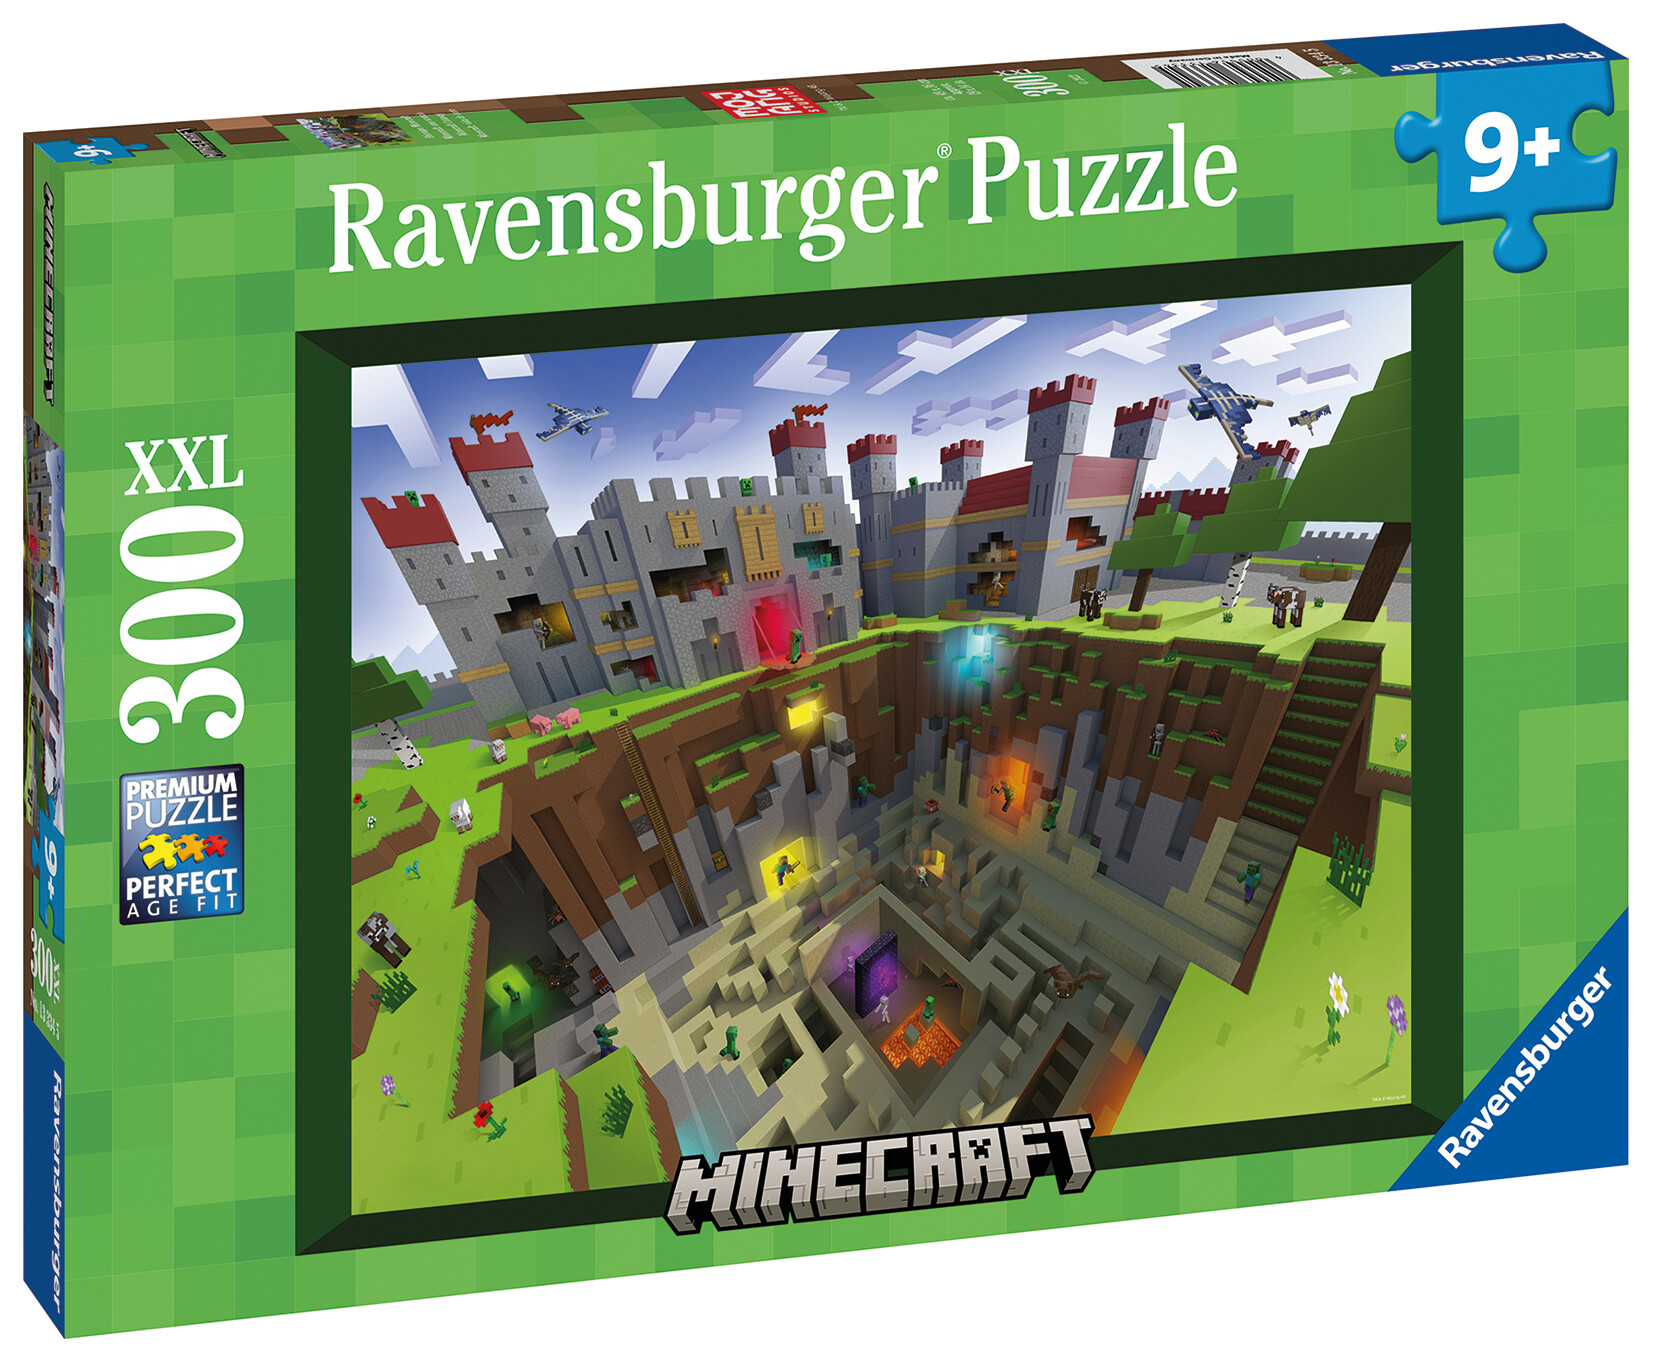 Ravensburger - puzzle minecraft, 300 pezzi xxl, età raccomandata 9+ anni - RAVENSBURGER